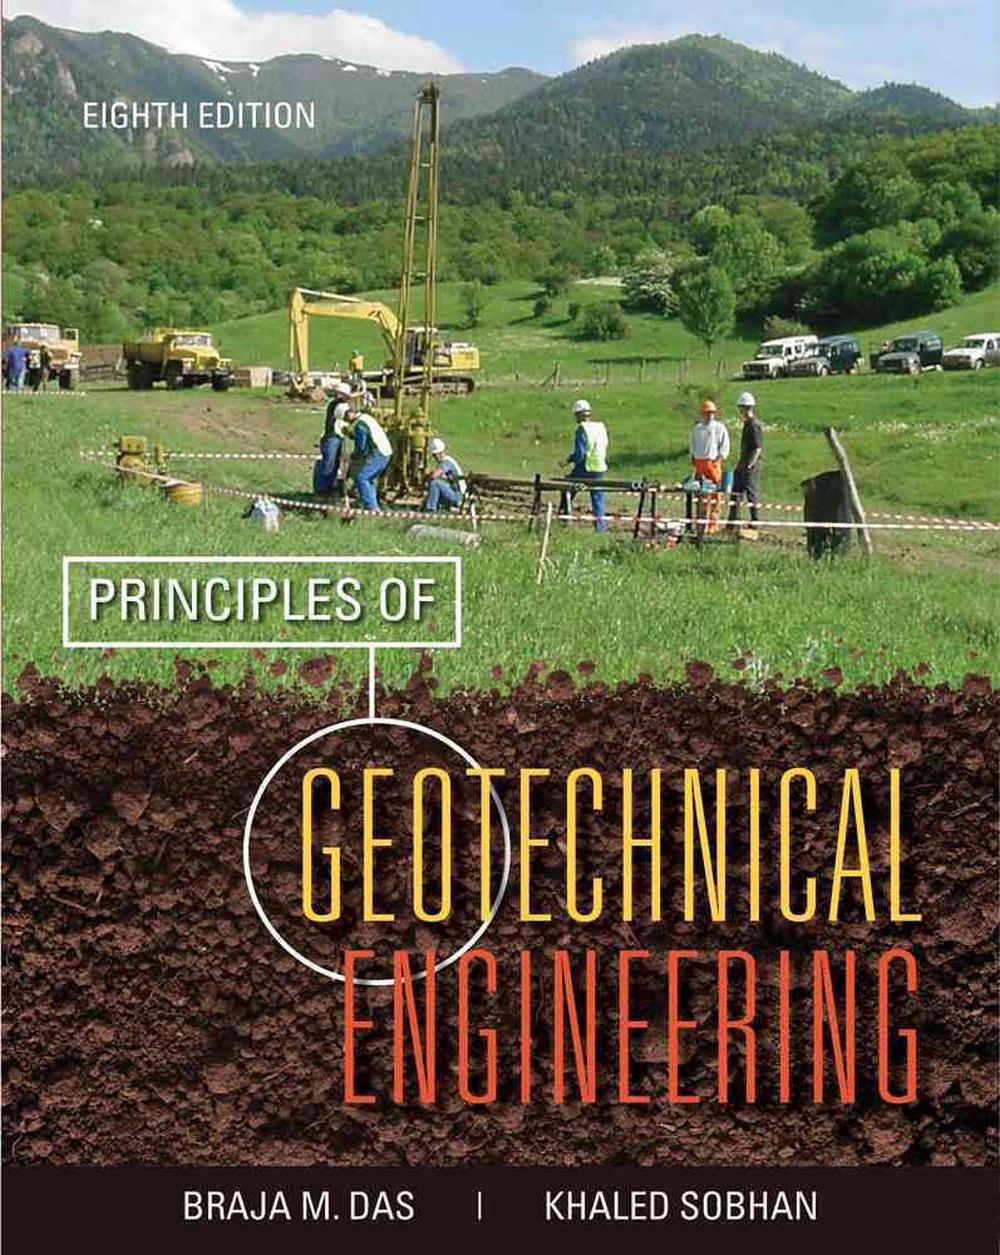 geotechnical engineering dissertation topics